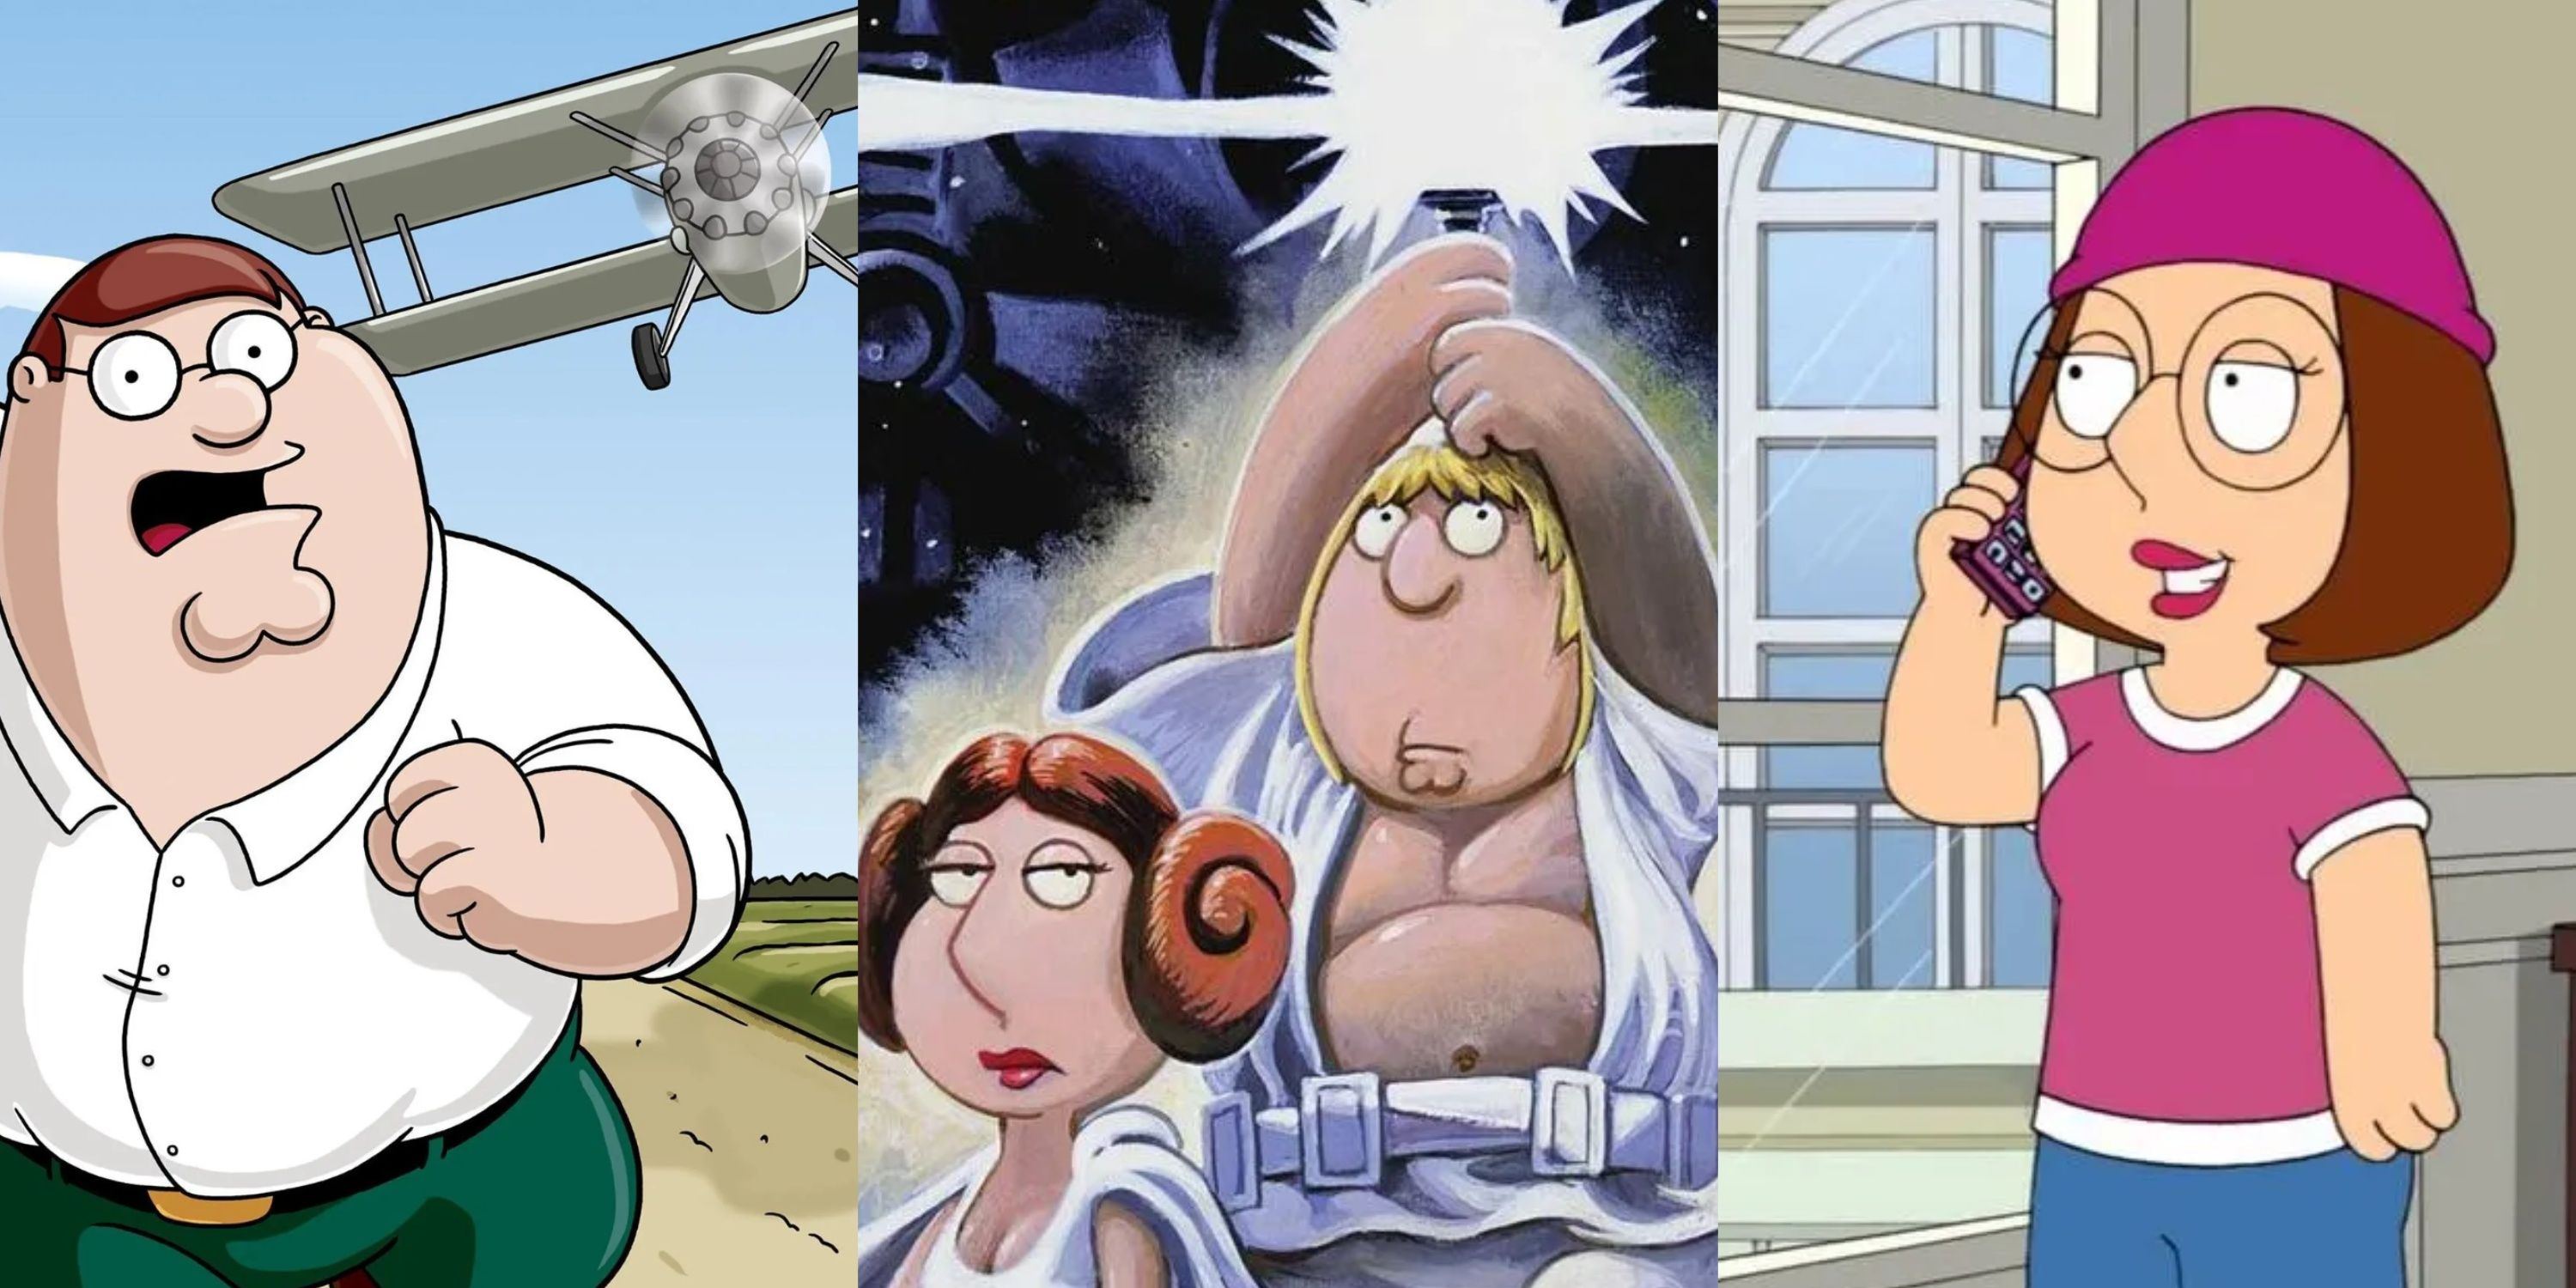 Split image Peter Griffin runs from plane, Family Guy Star Wars, Meg Griffin on phone